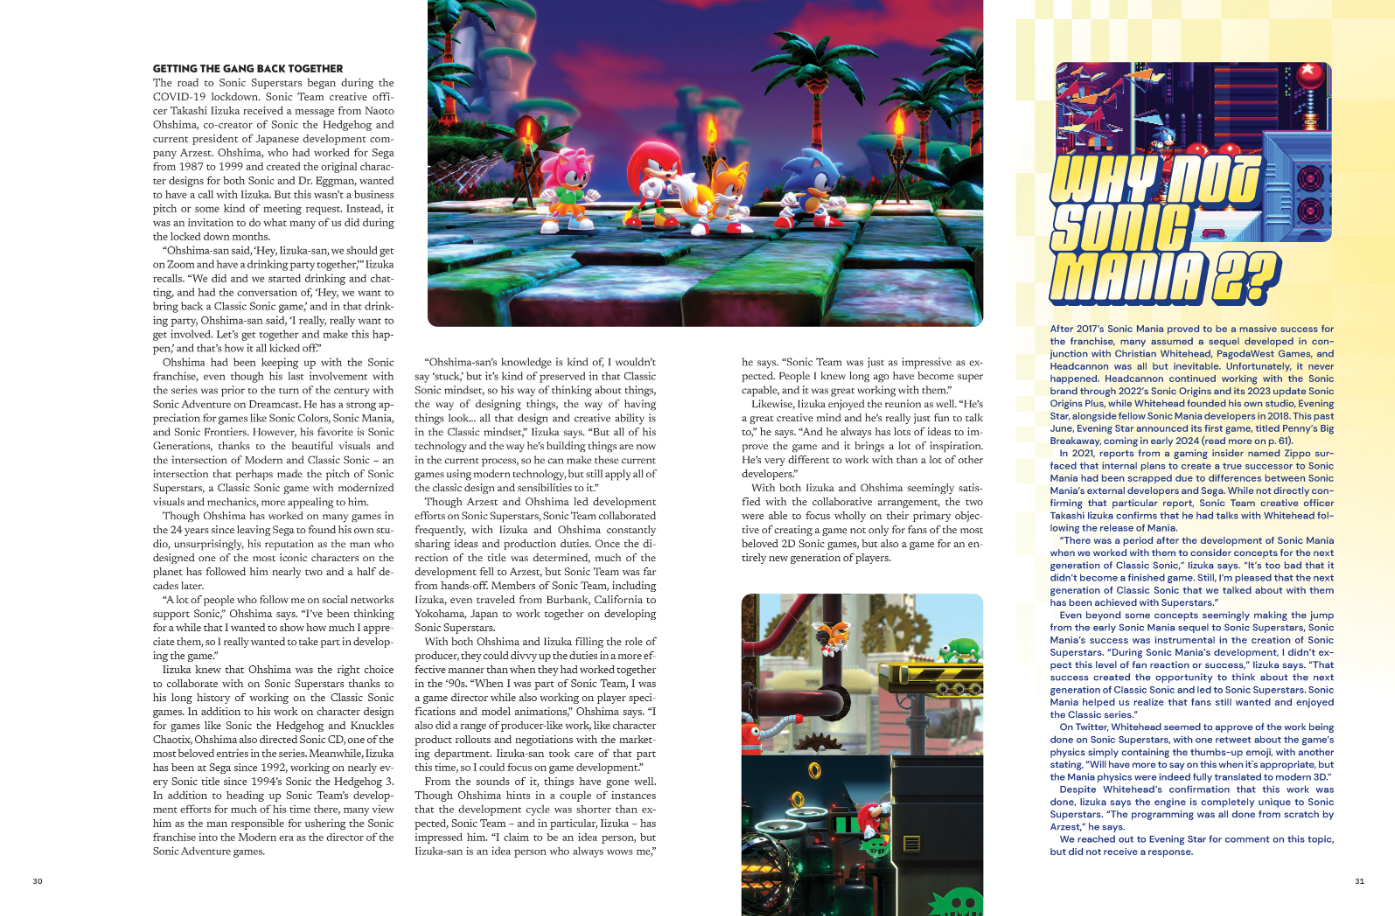 Sonic Superstars Review In Progress - Game Informer